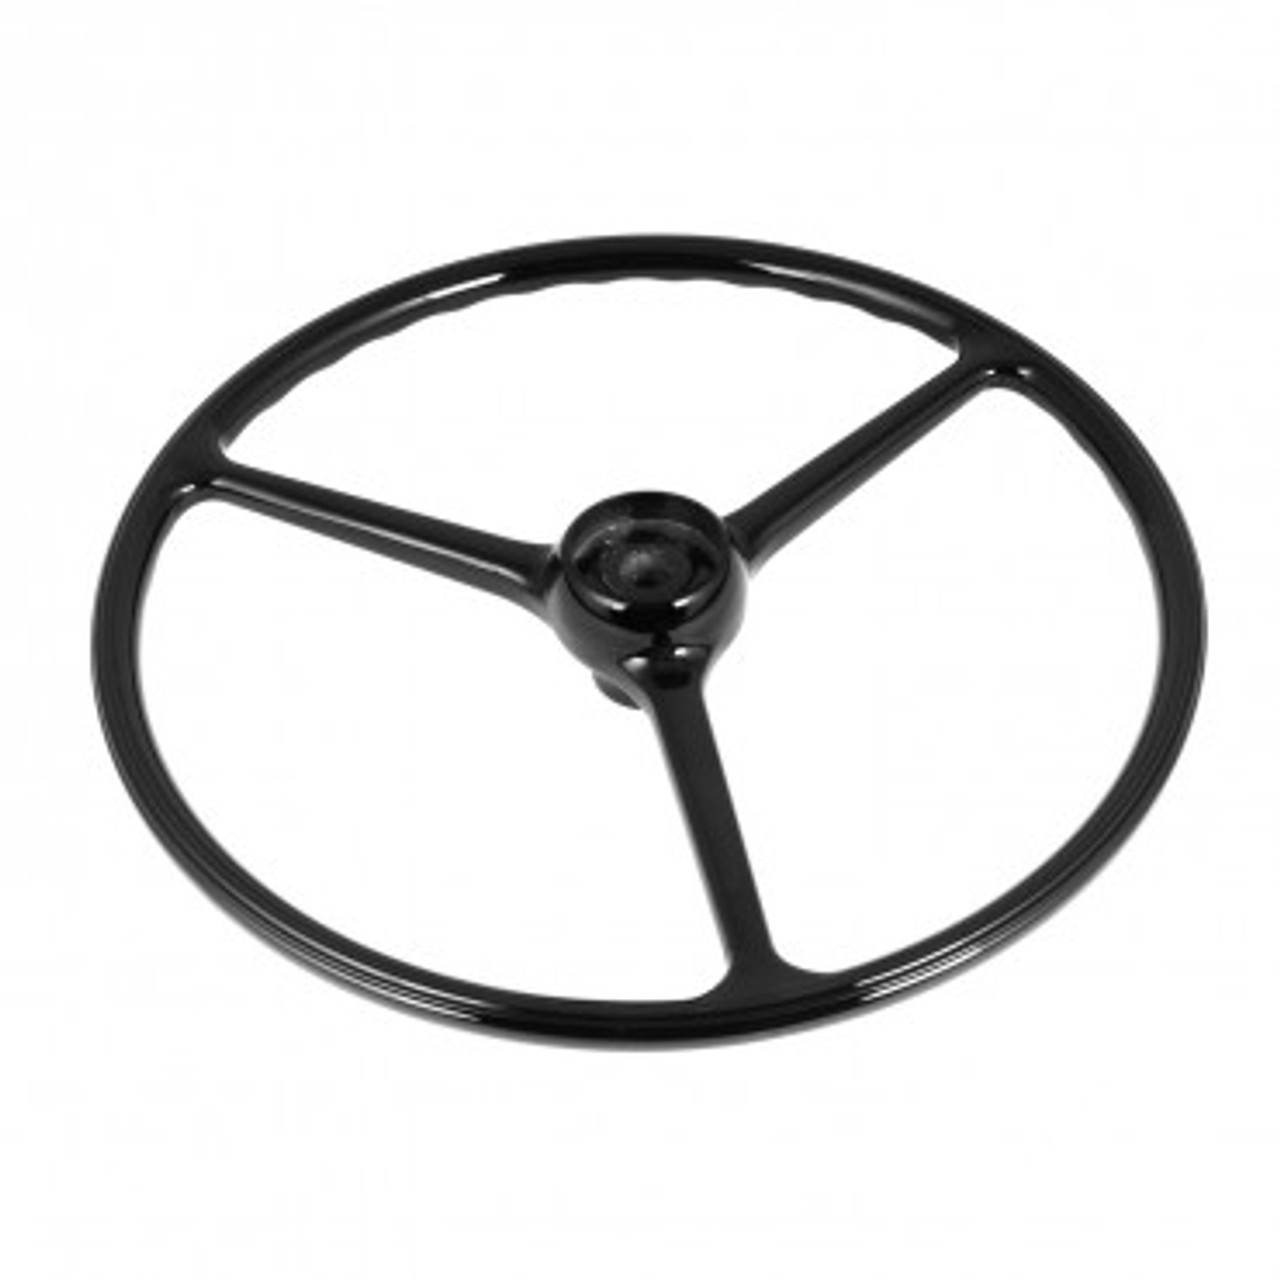 Steering wheel, 2-3/8" center cap